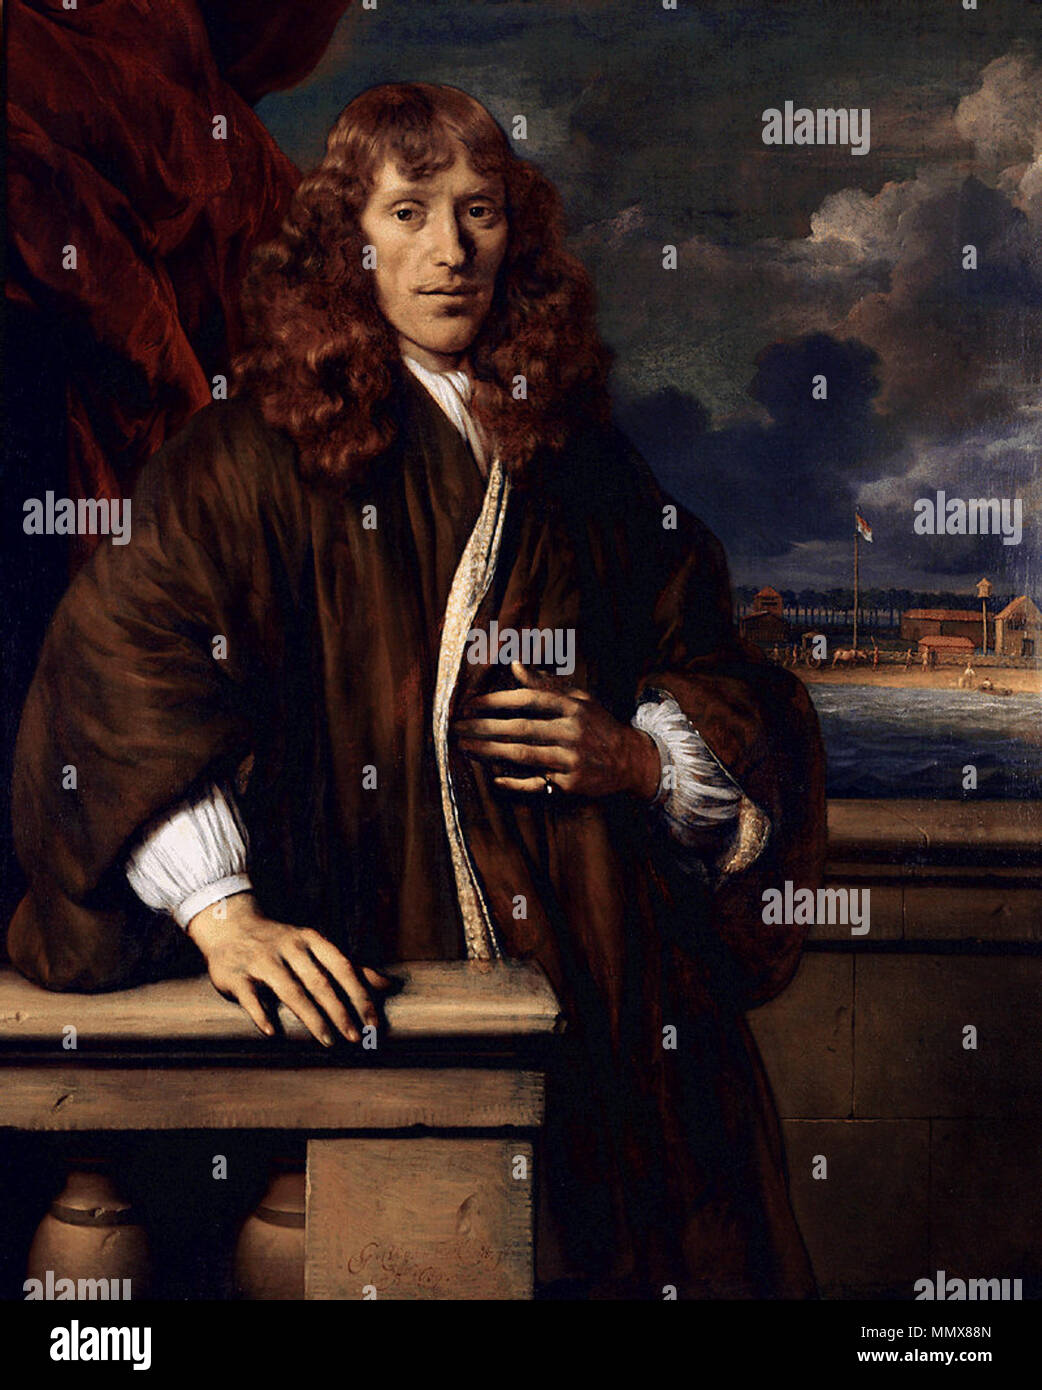 Portrait von Offizier der Niederländischen Ostindien-Kompanie. 1669. Gerbrand van den Eeckhout - Portret van een Hoge functionaris Bij de Oostindische Companie Stockfoto